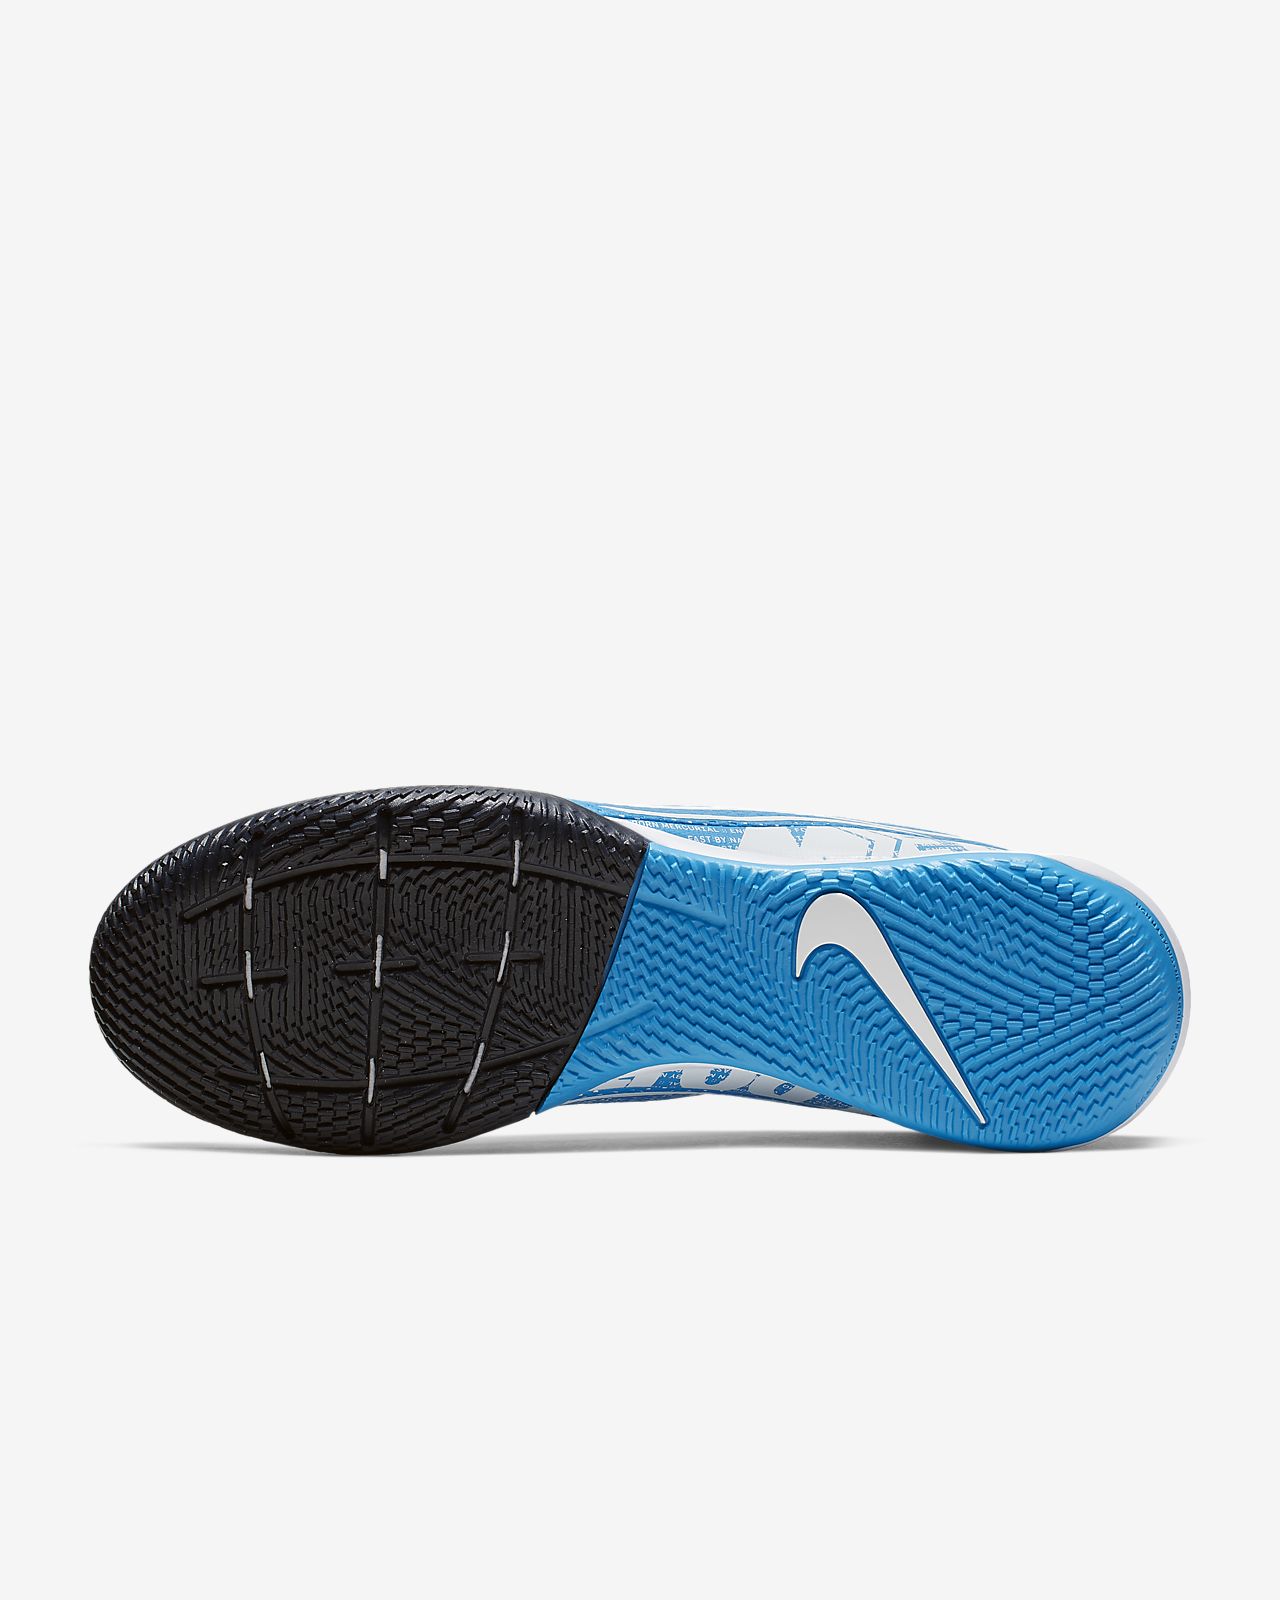 Unboxing: NEW Nike Mercurial Vapor 13 Pro, New Lights